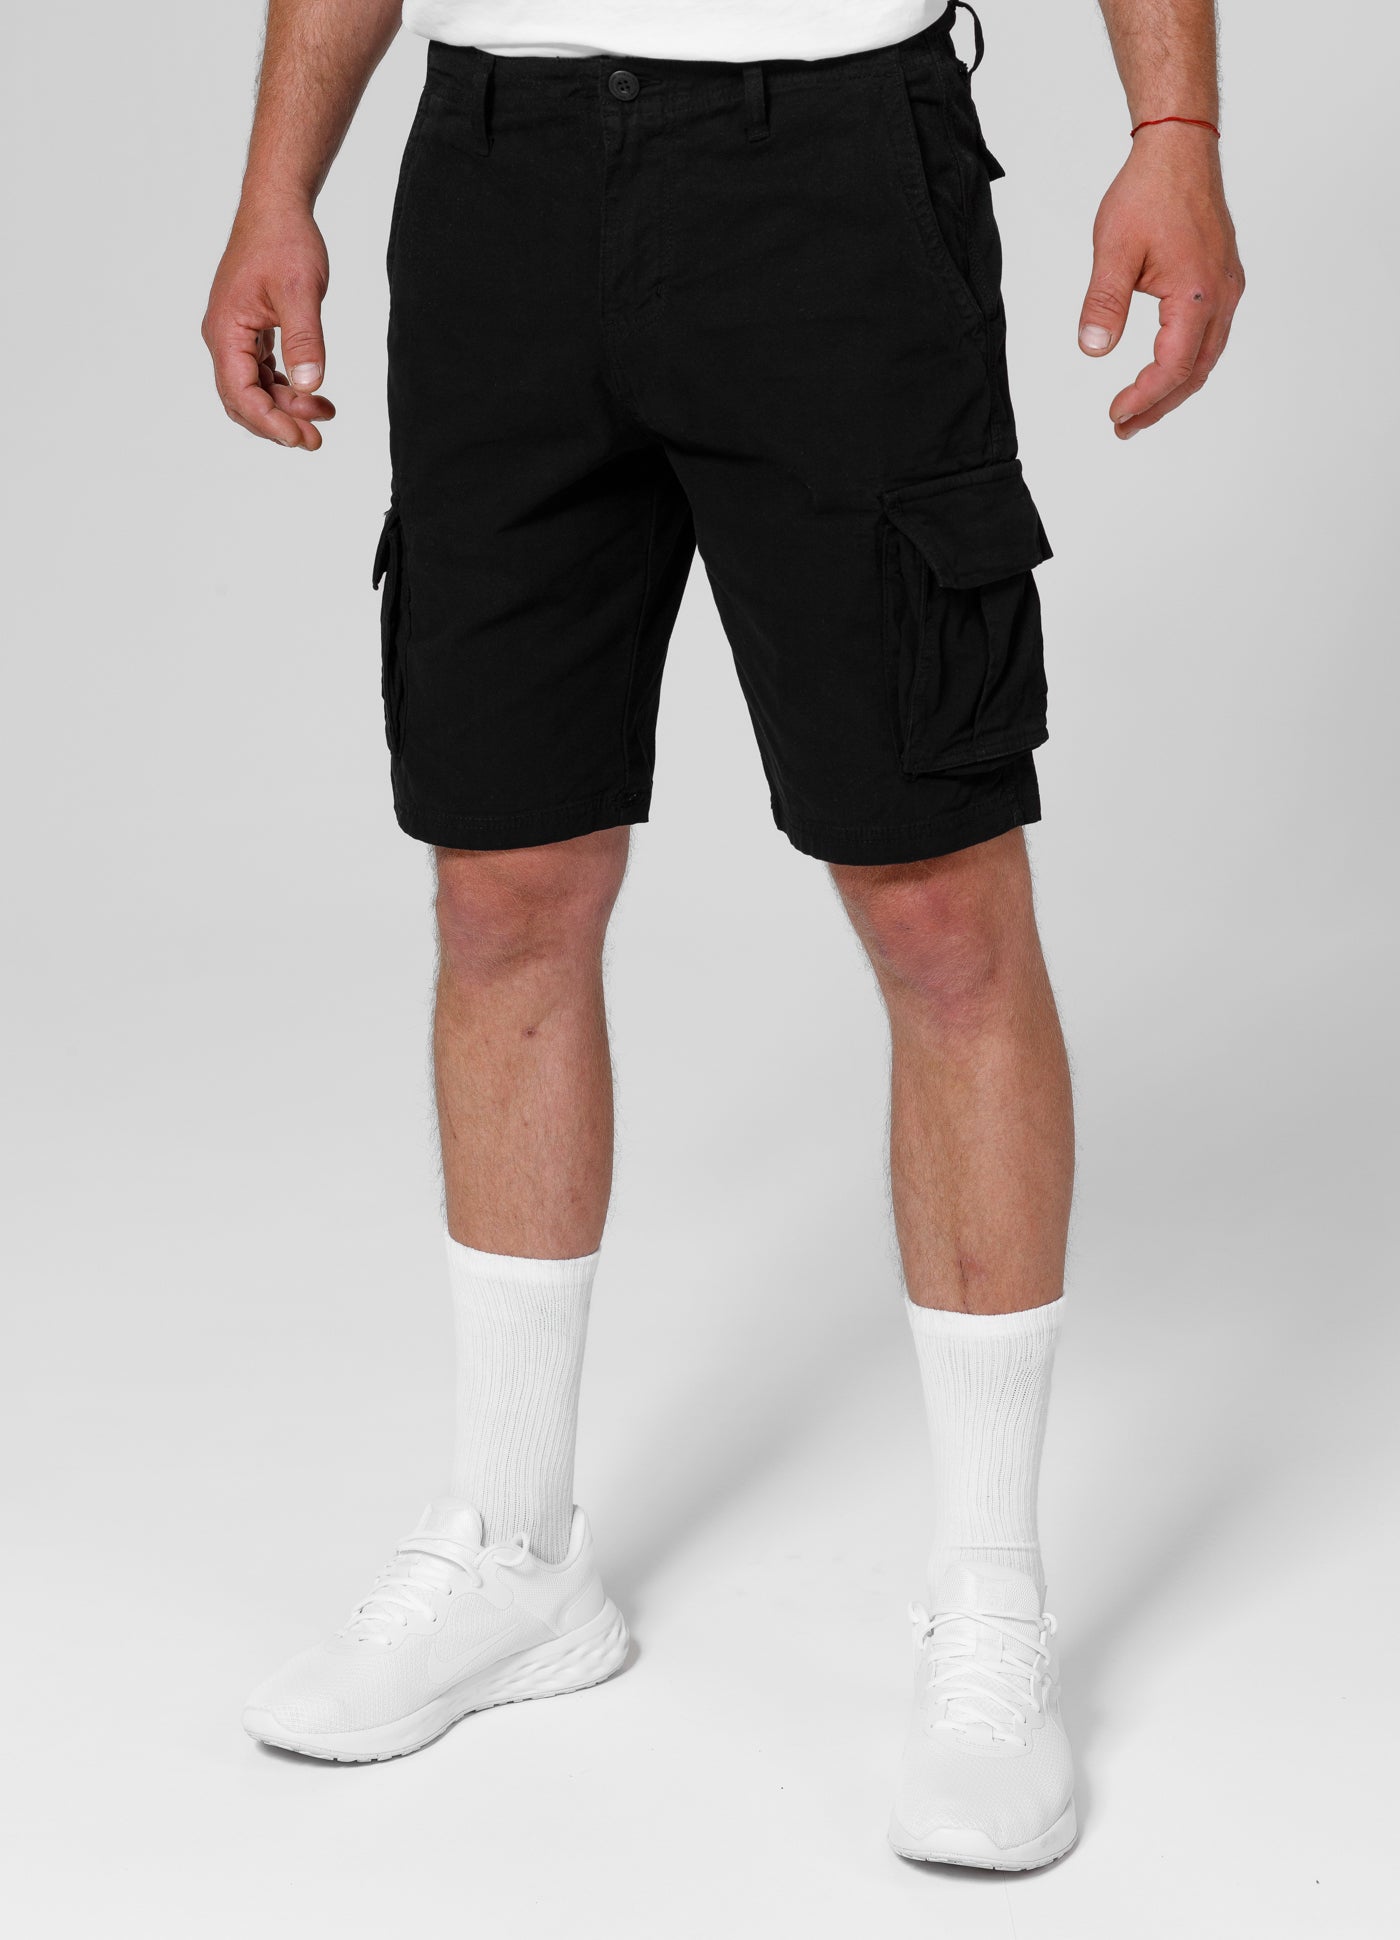 JACKAL Black Cargo Shorts